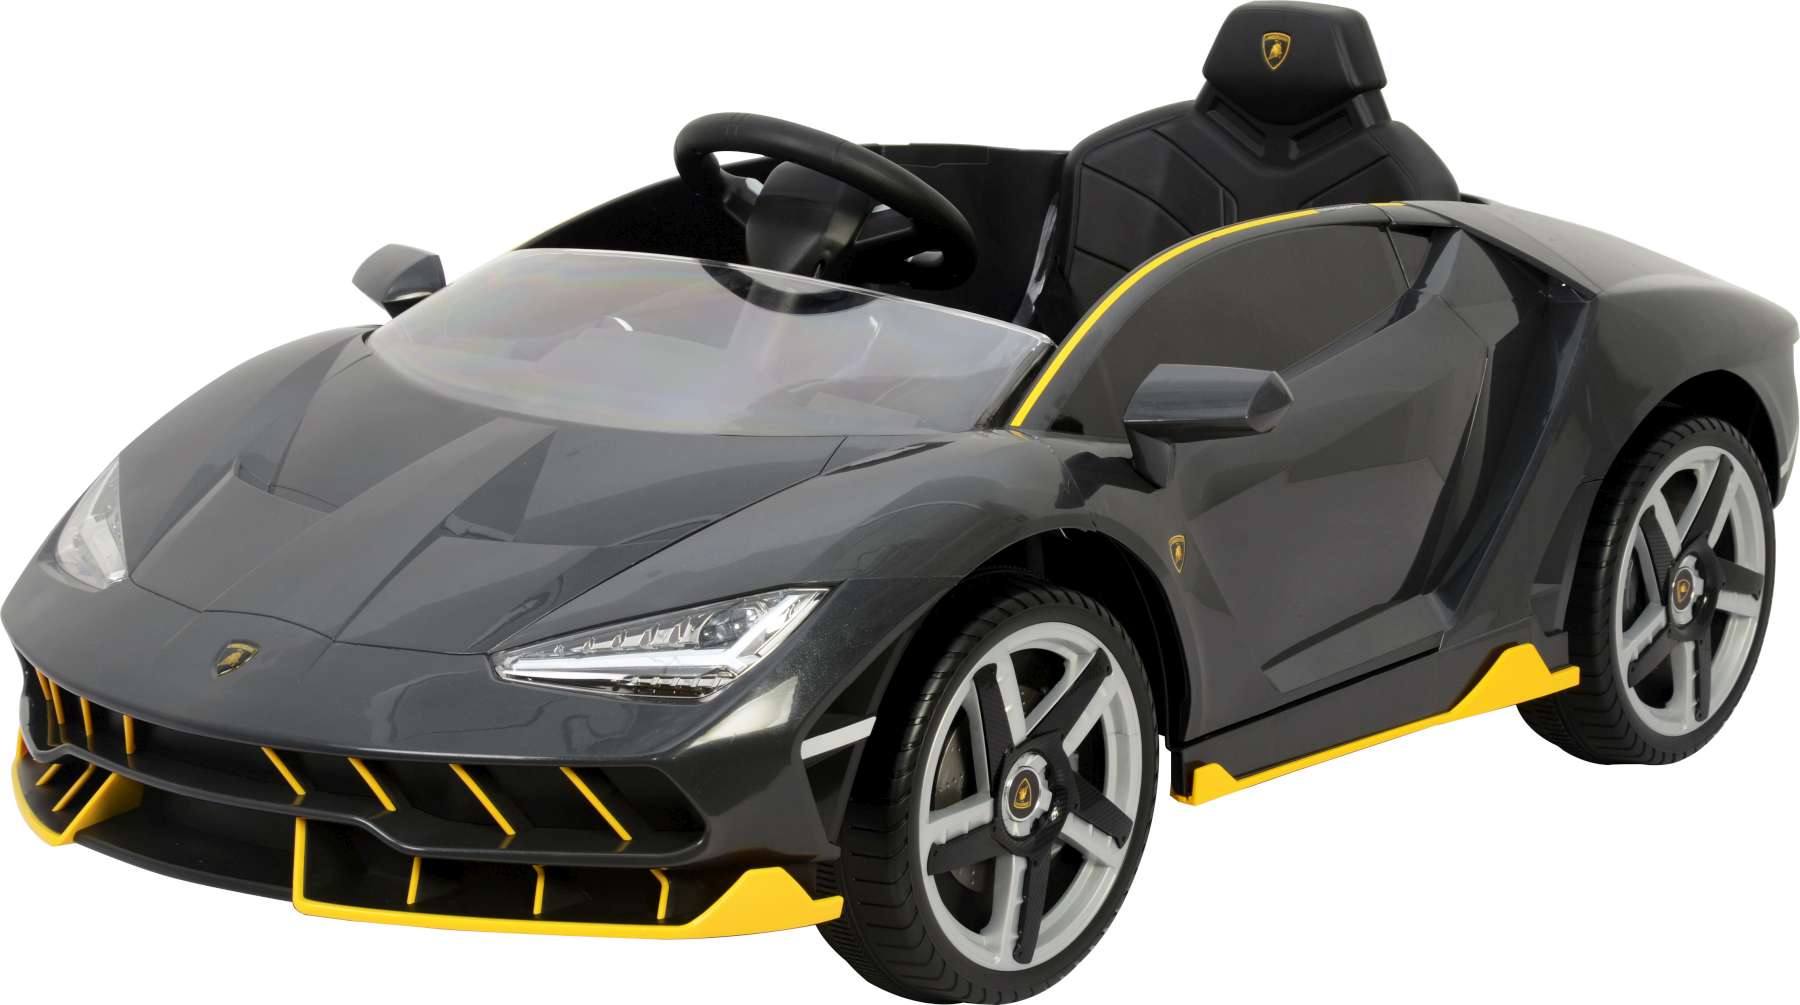 Lamborghini Centenario - Grau - Elektroauto - mit Fernbedienung